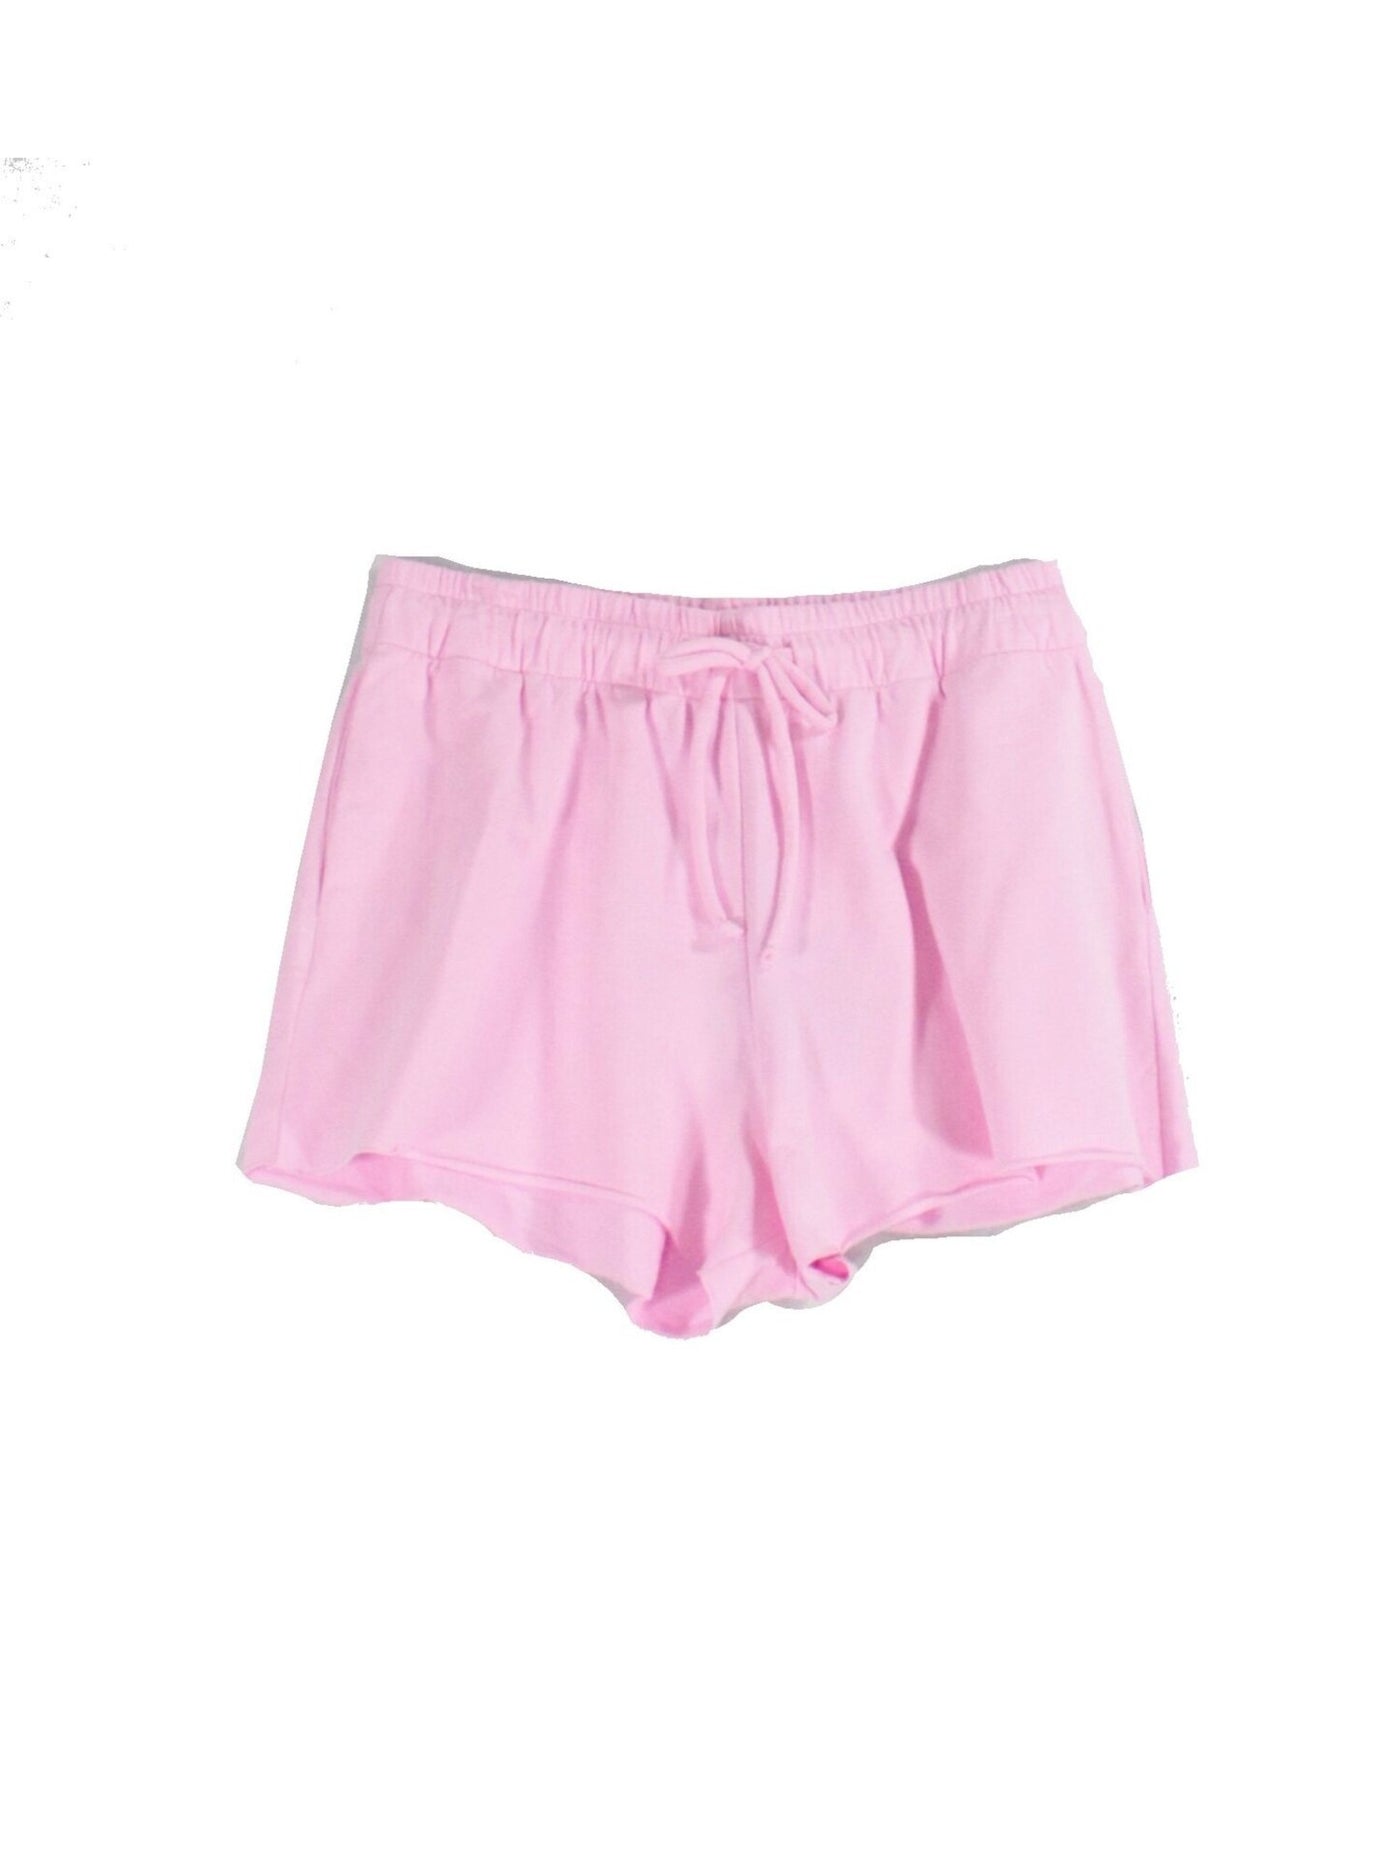 BETSY & ADAM Womens Pink Stretch Tie Short Length Raw Hem, Pull-on Shorts S